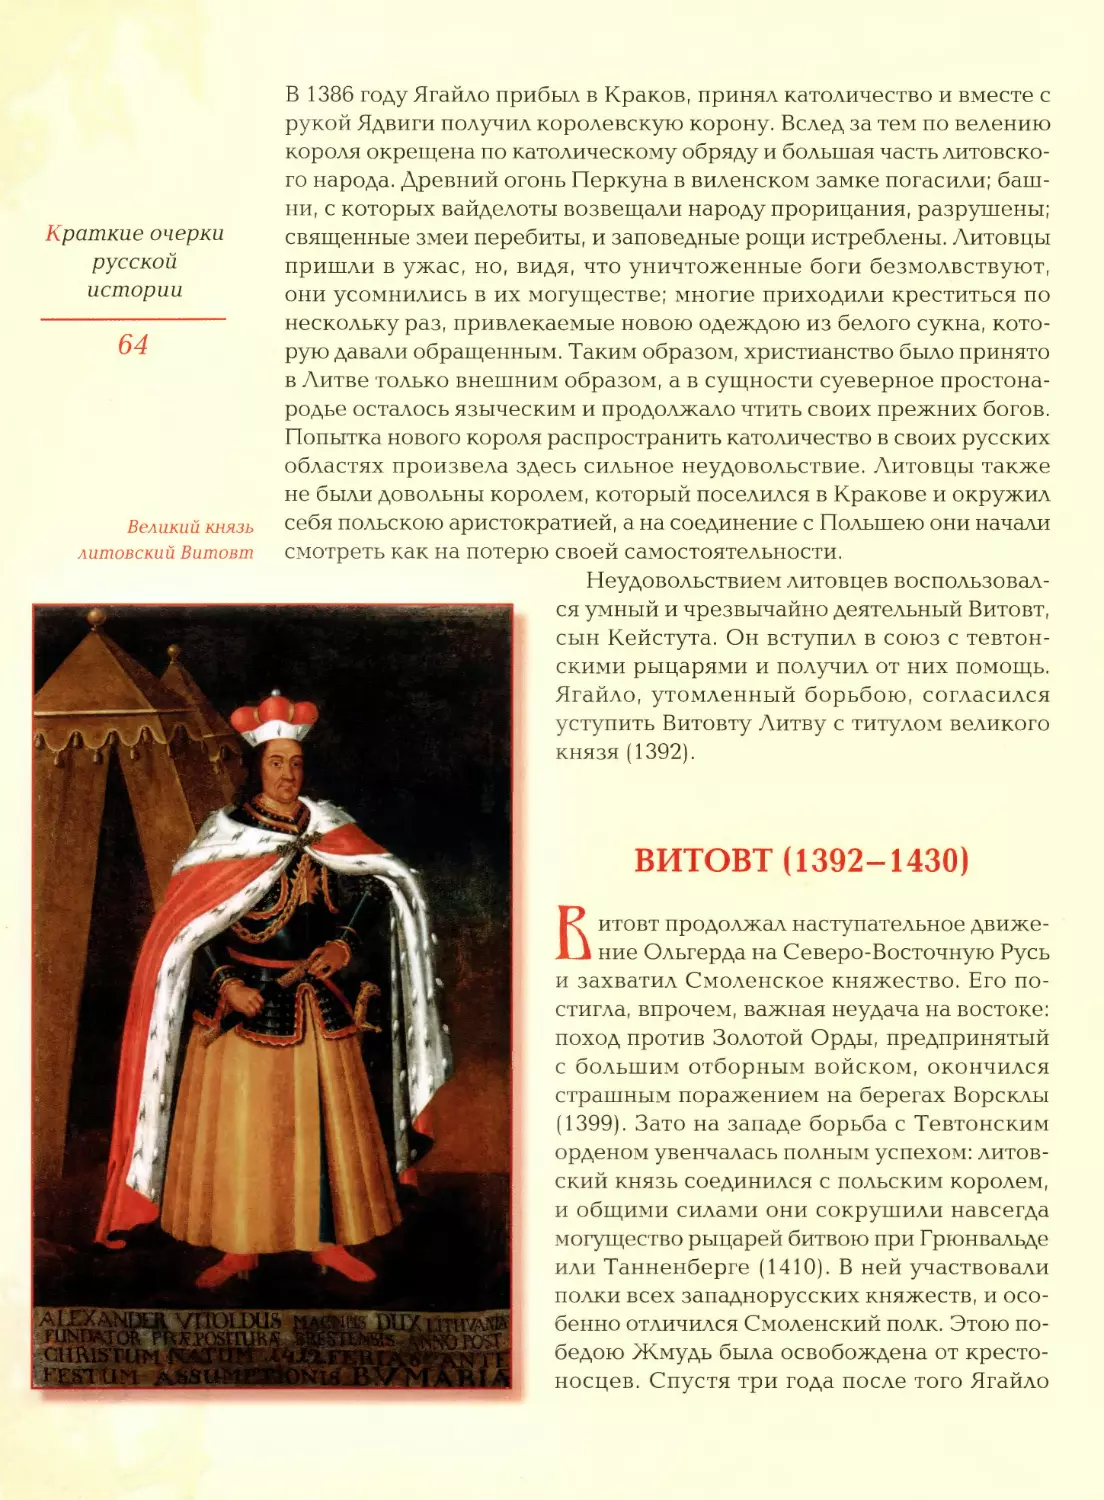 Витовт (1392—1430